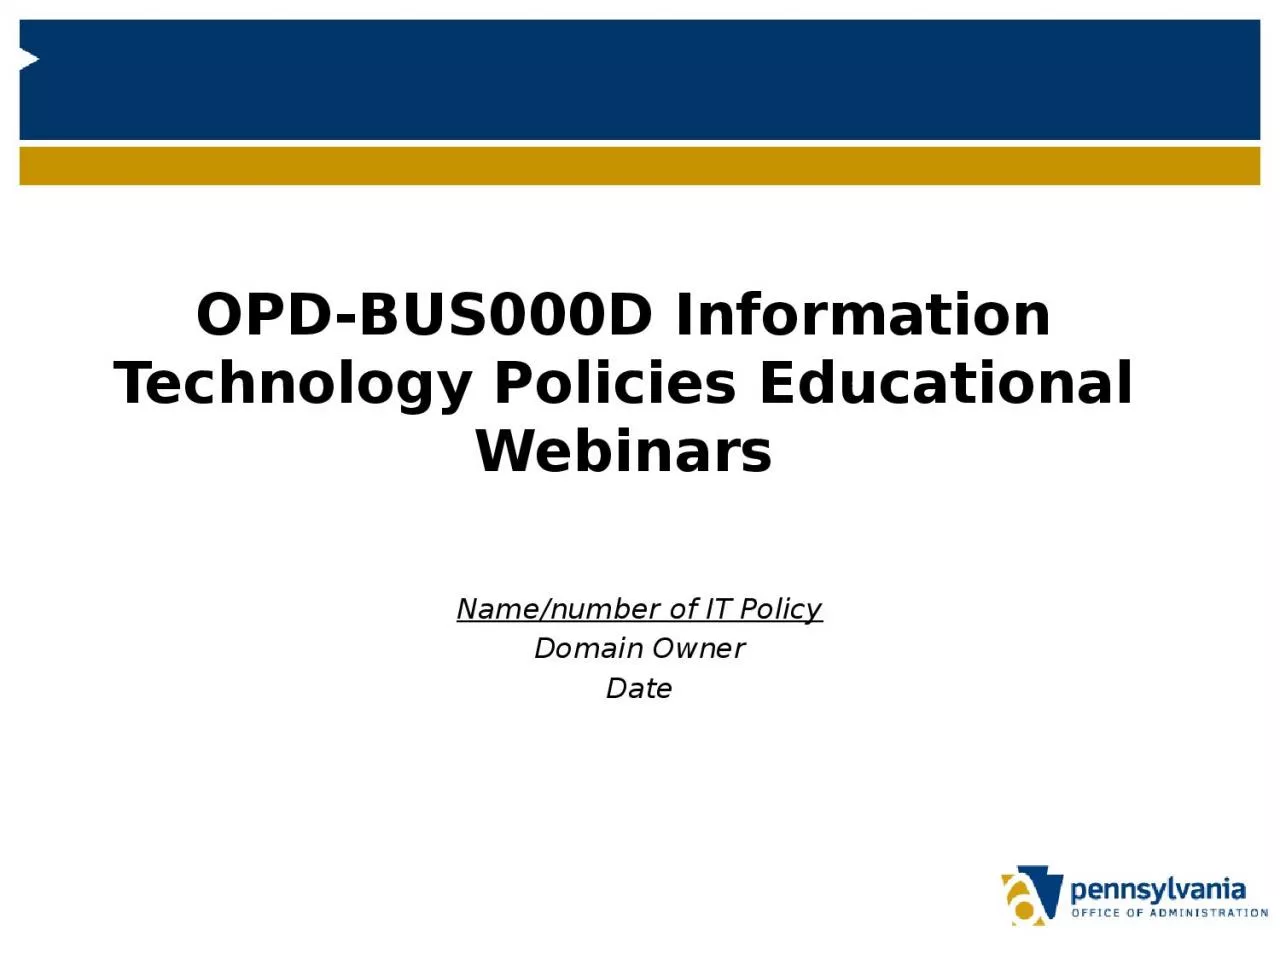 OPD-BUS000D Information Technology Policies Educational Webinars